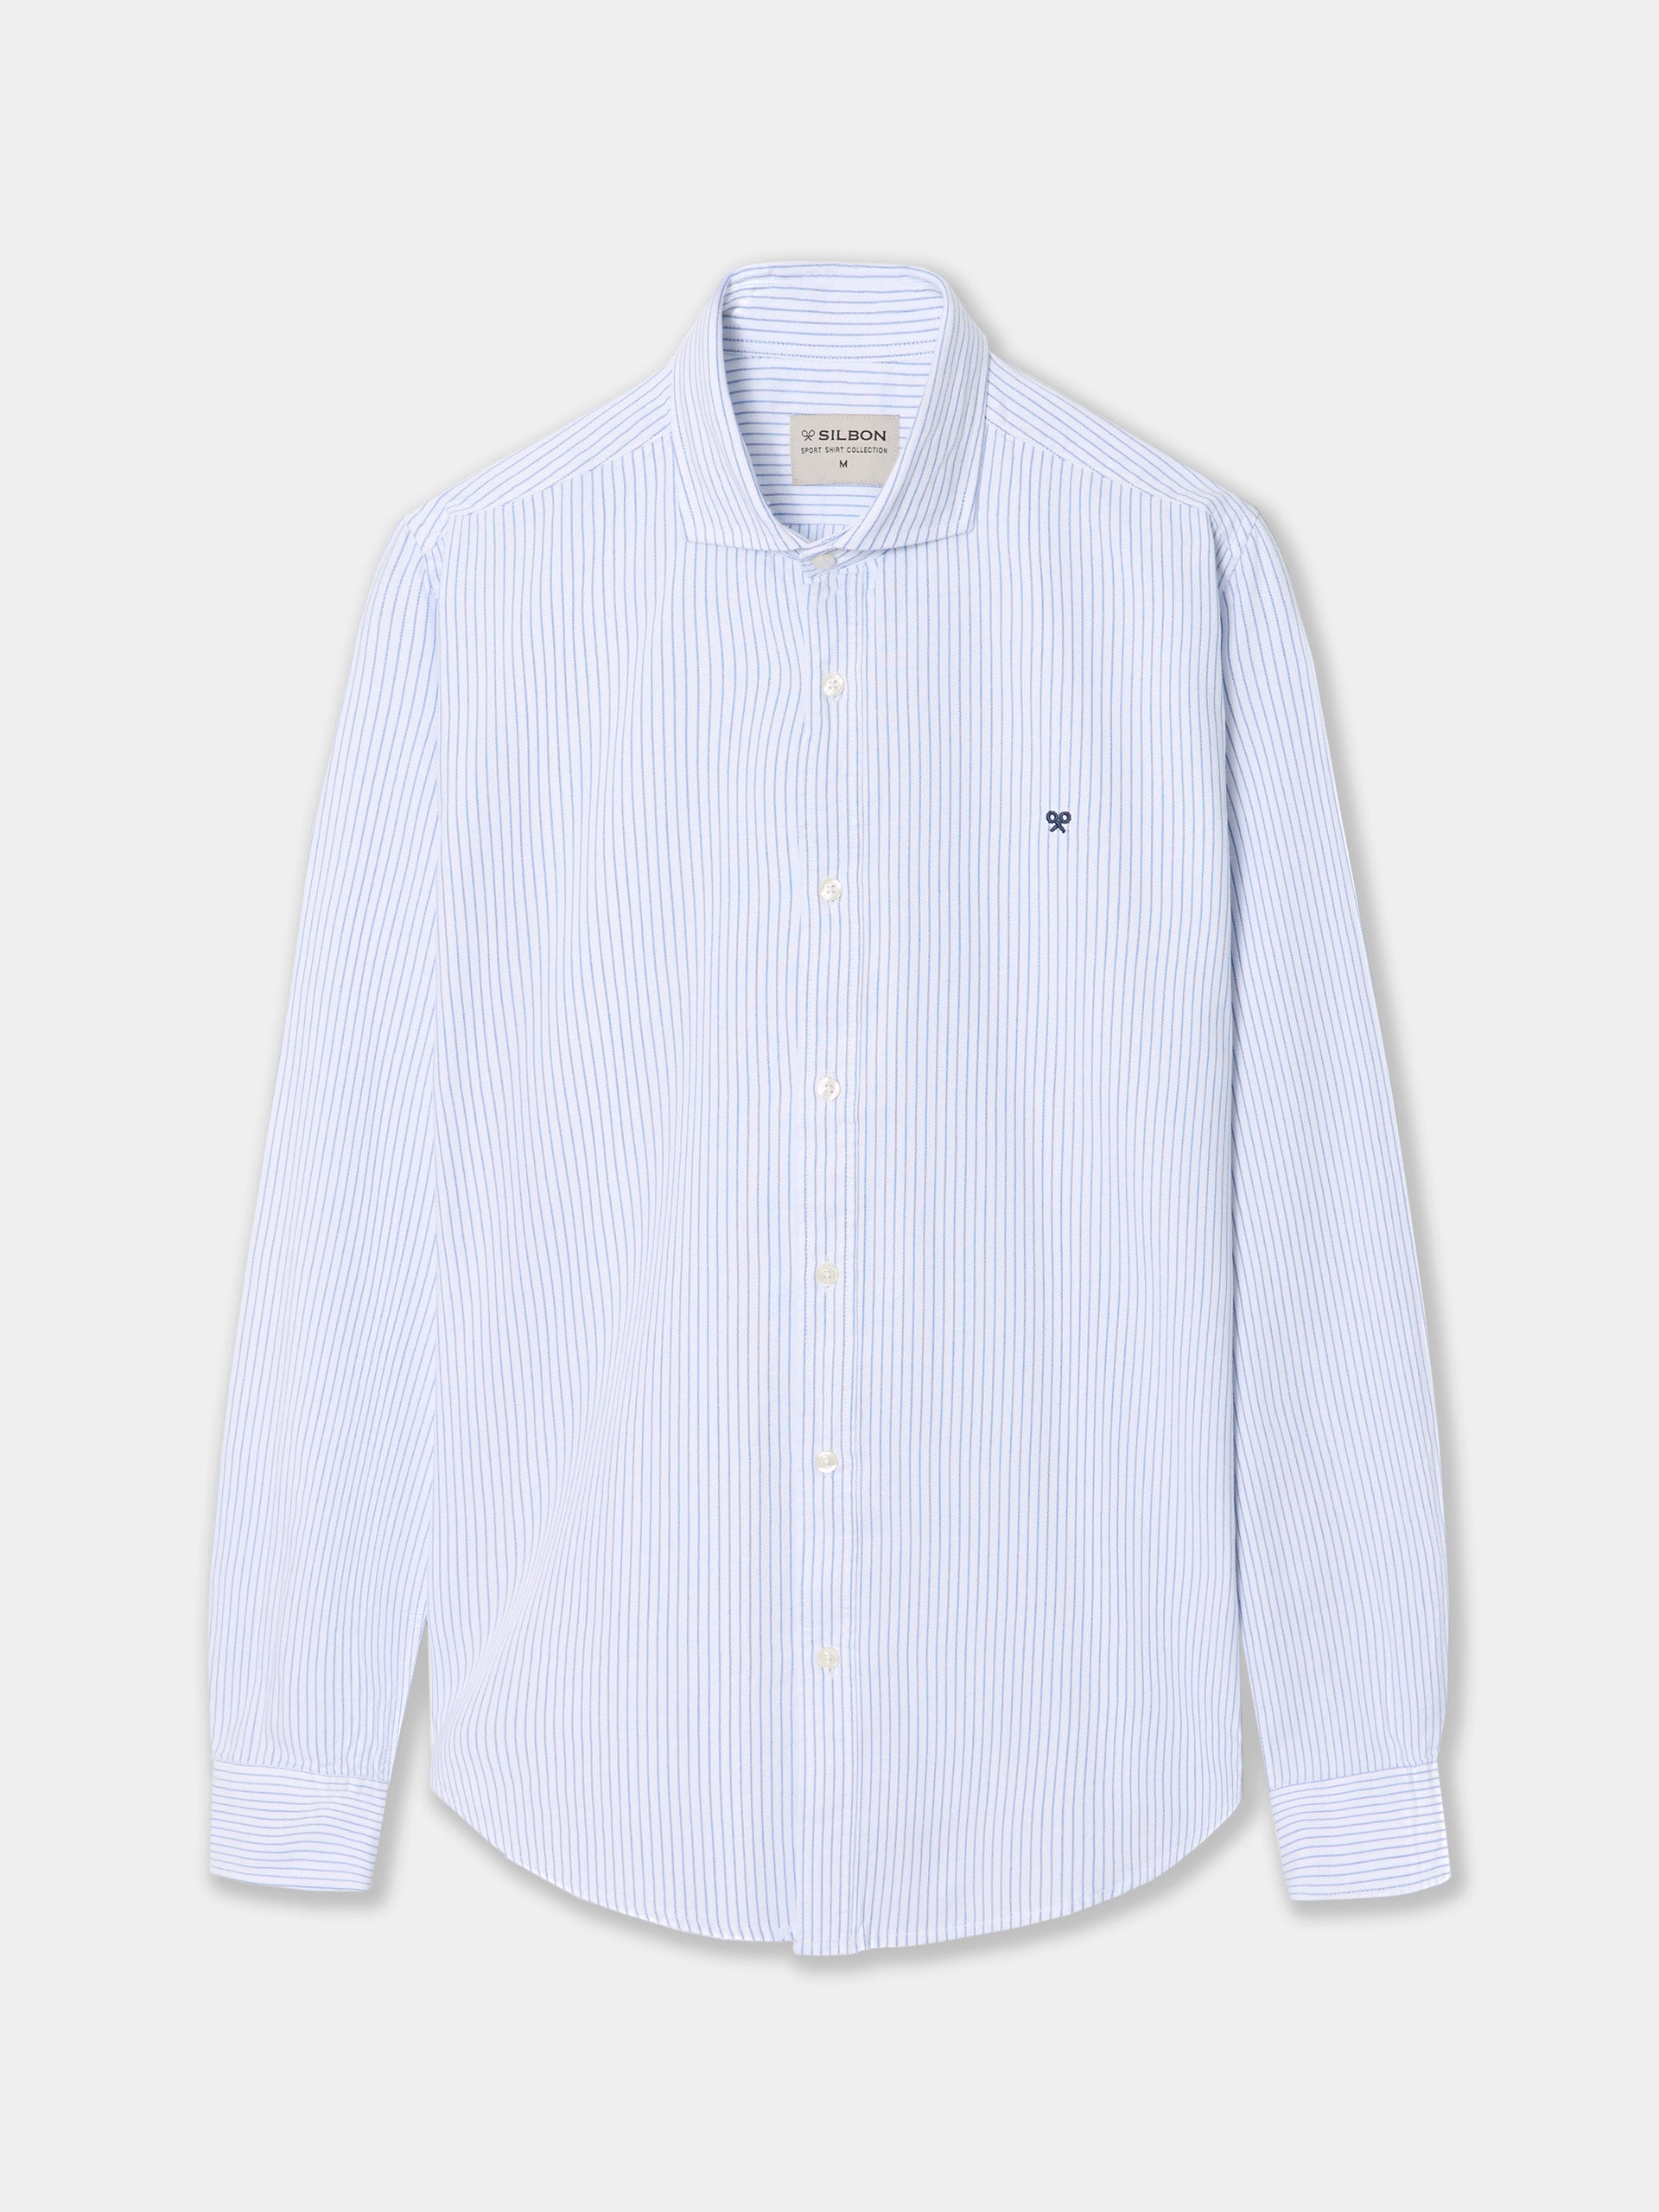 Camisa sport oxford raya fina azul blanca